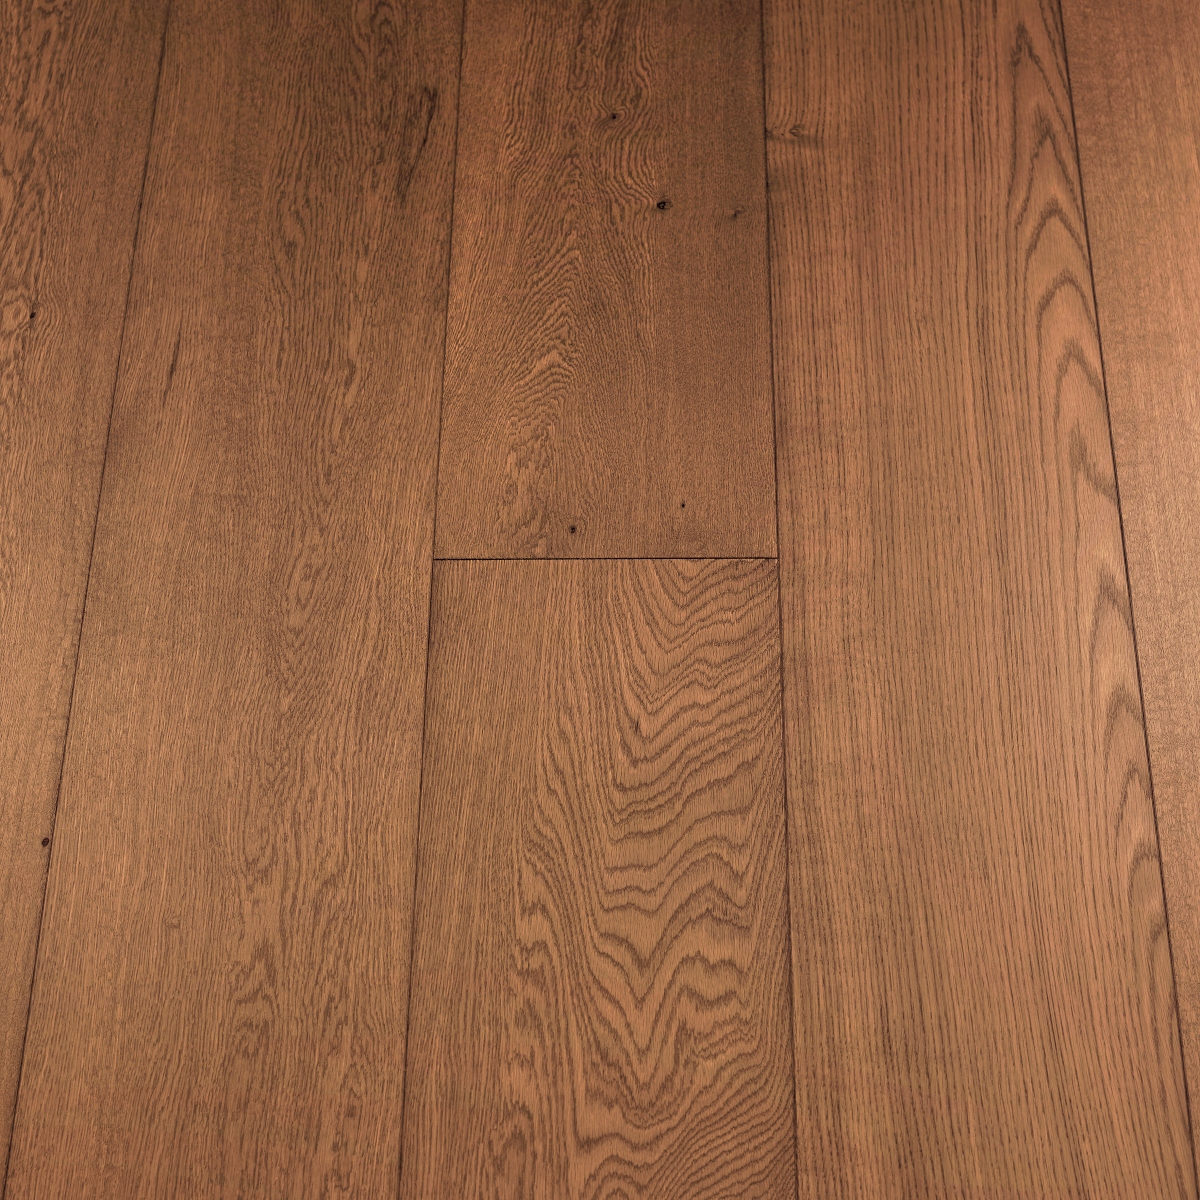 Mahogany 190mm x 18mm x 1900mm Bespoke Wood Flooring